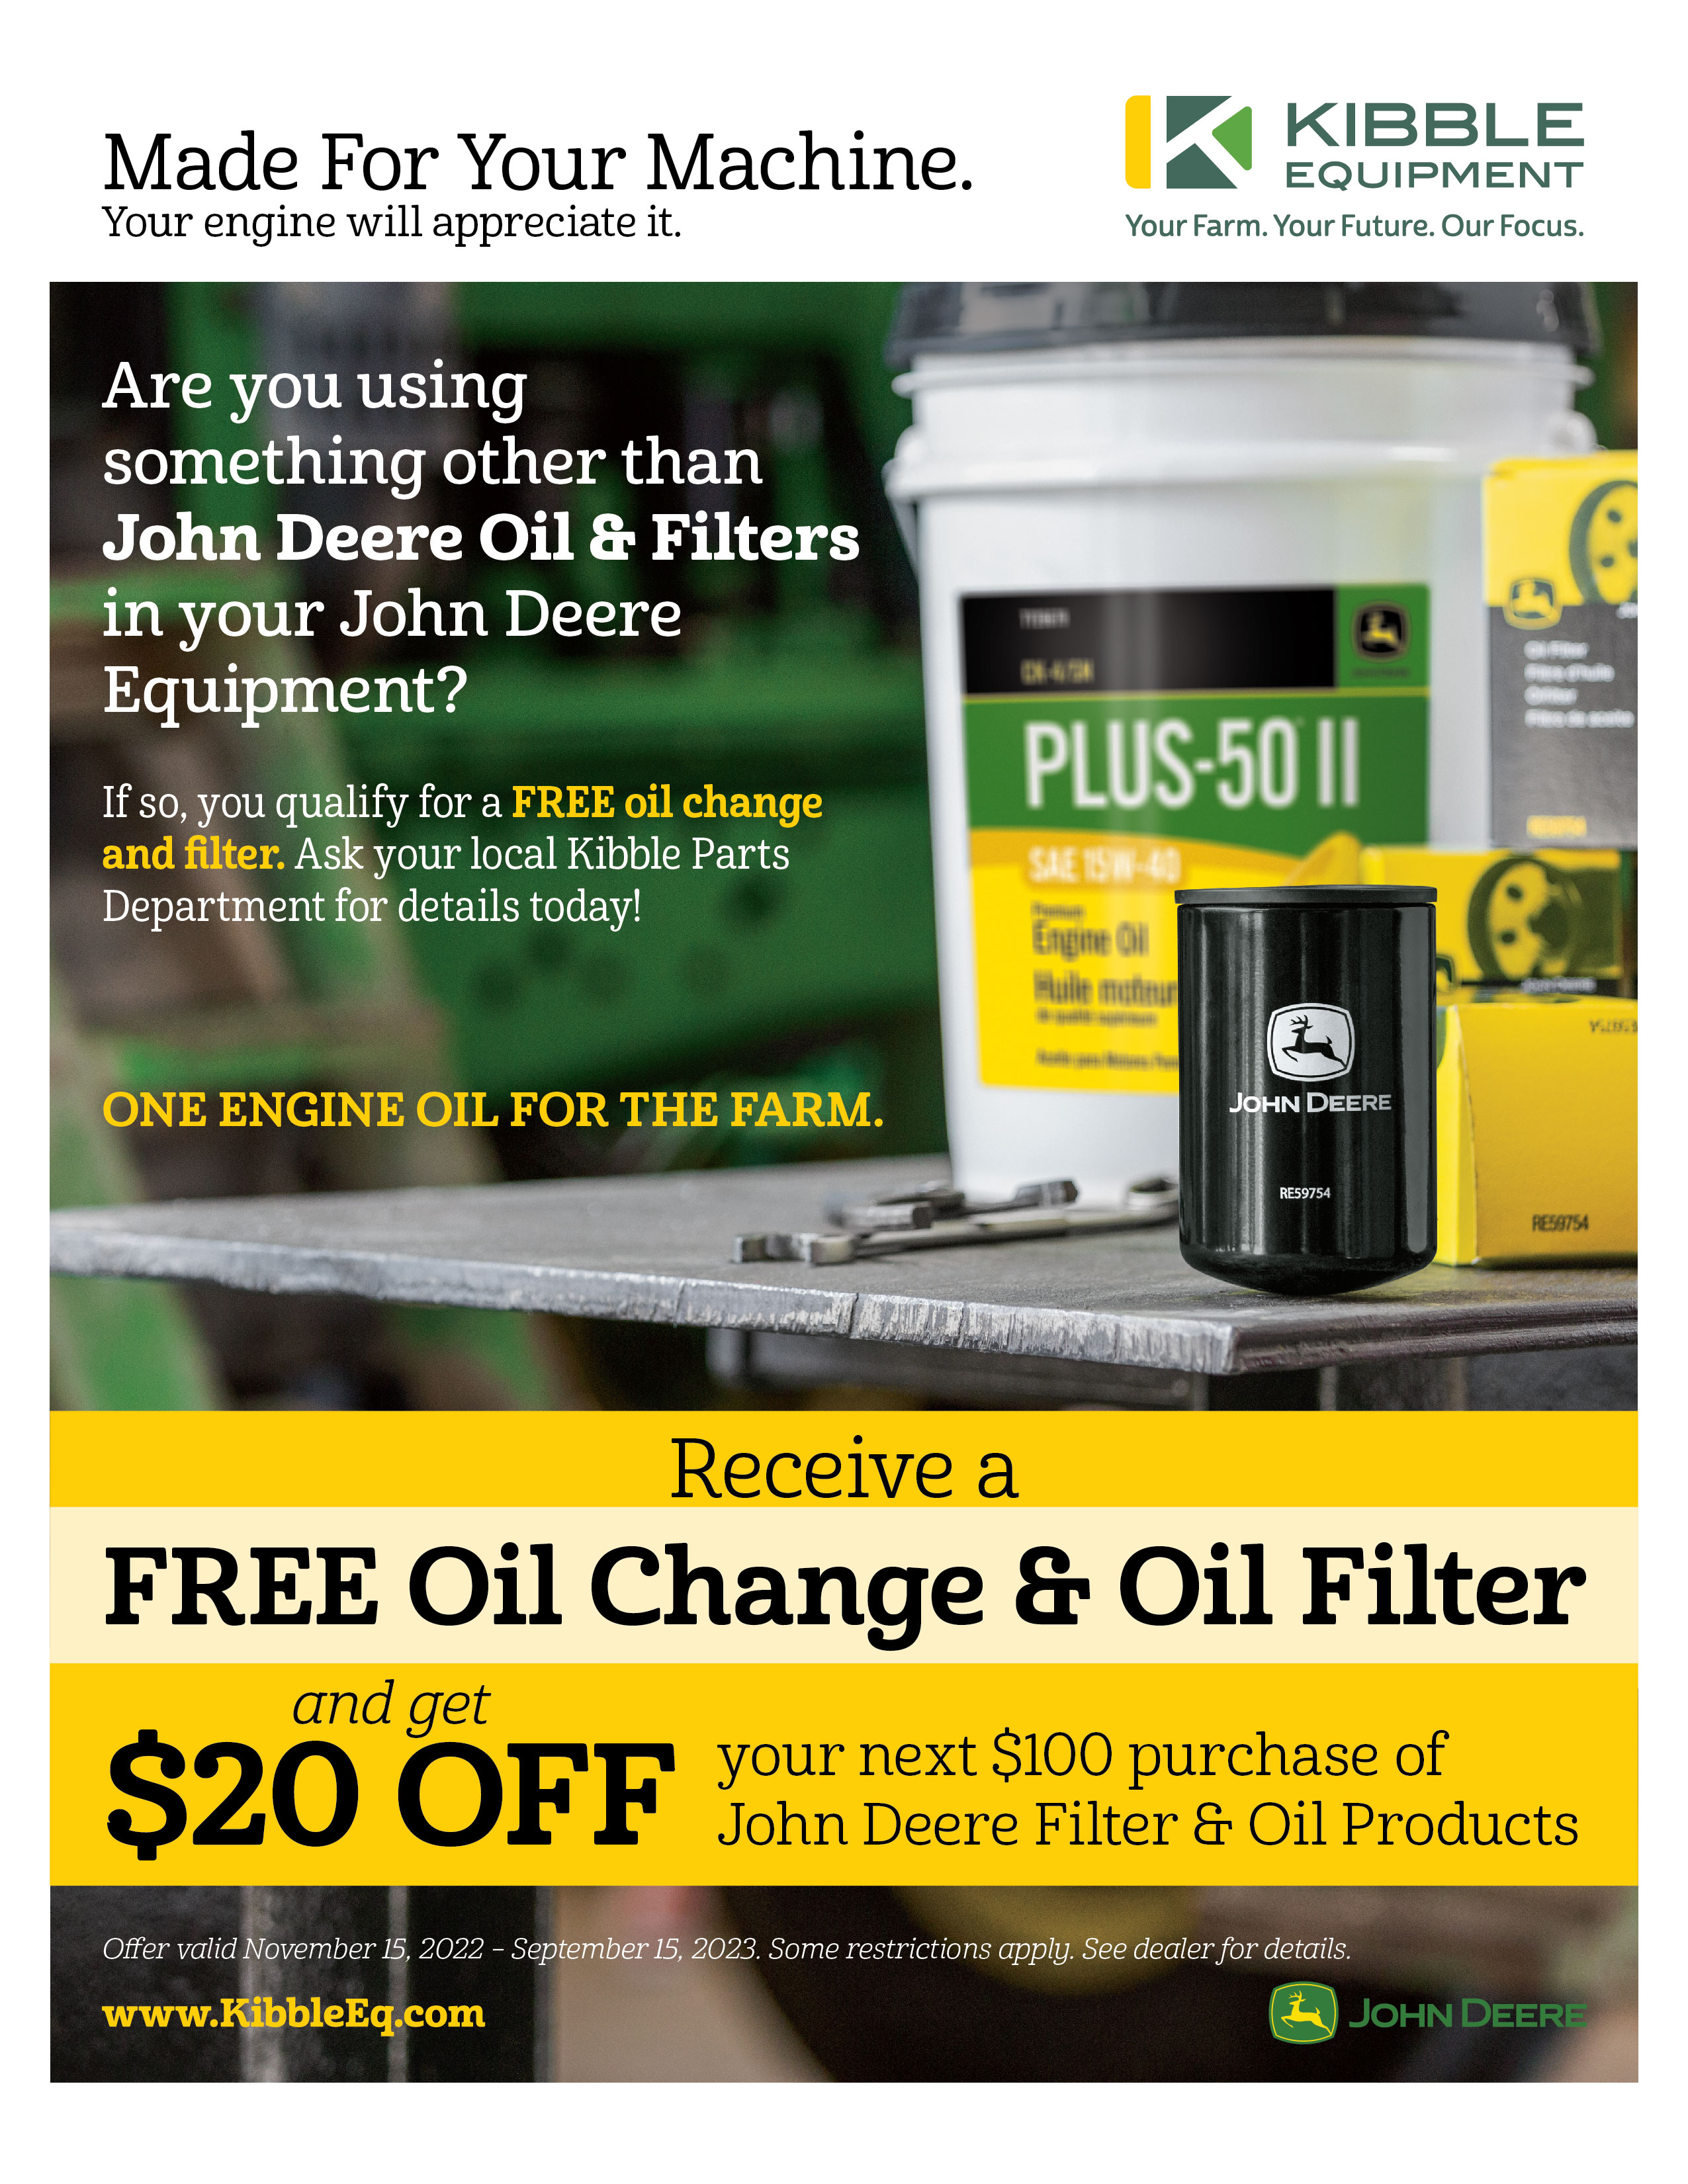 Oil & Filter